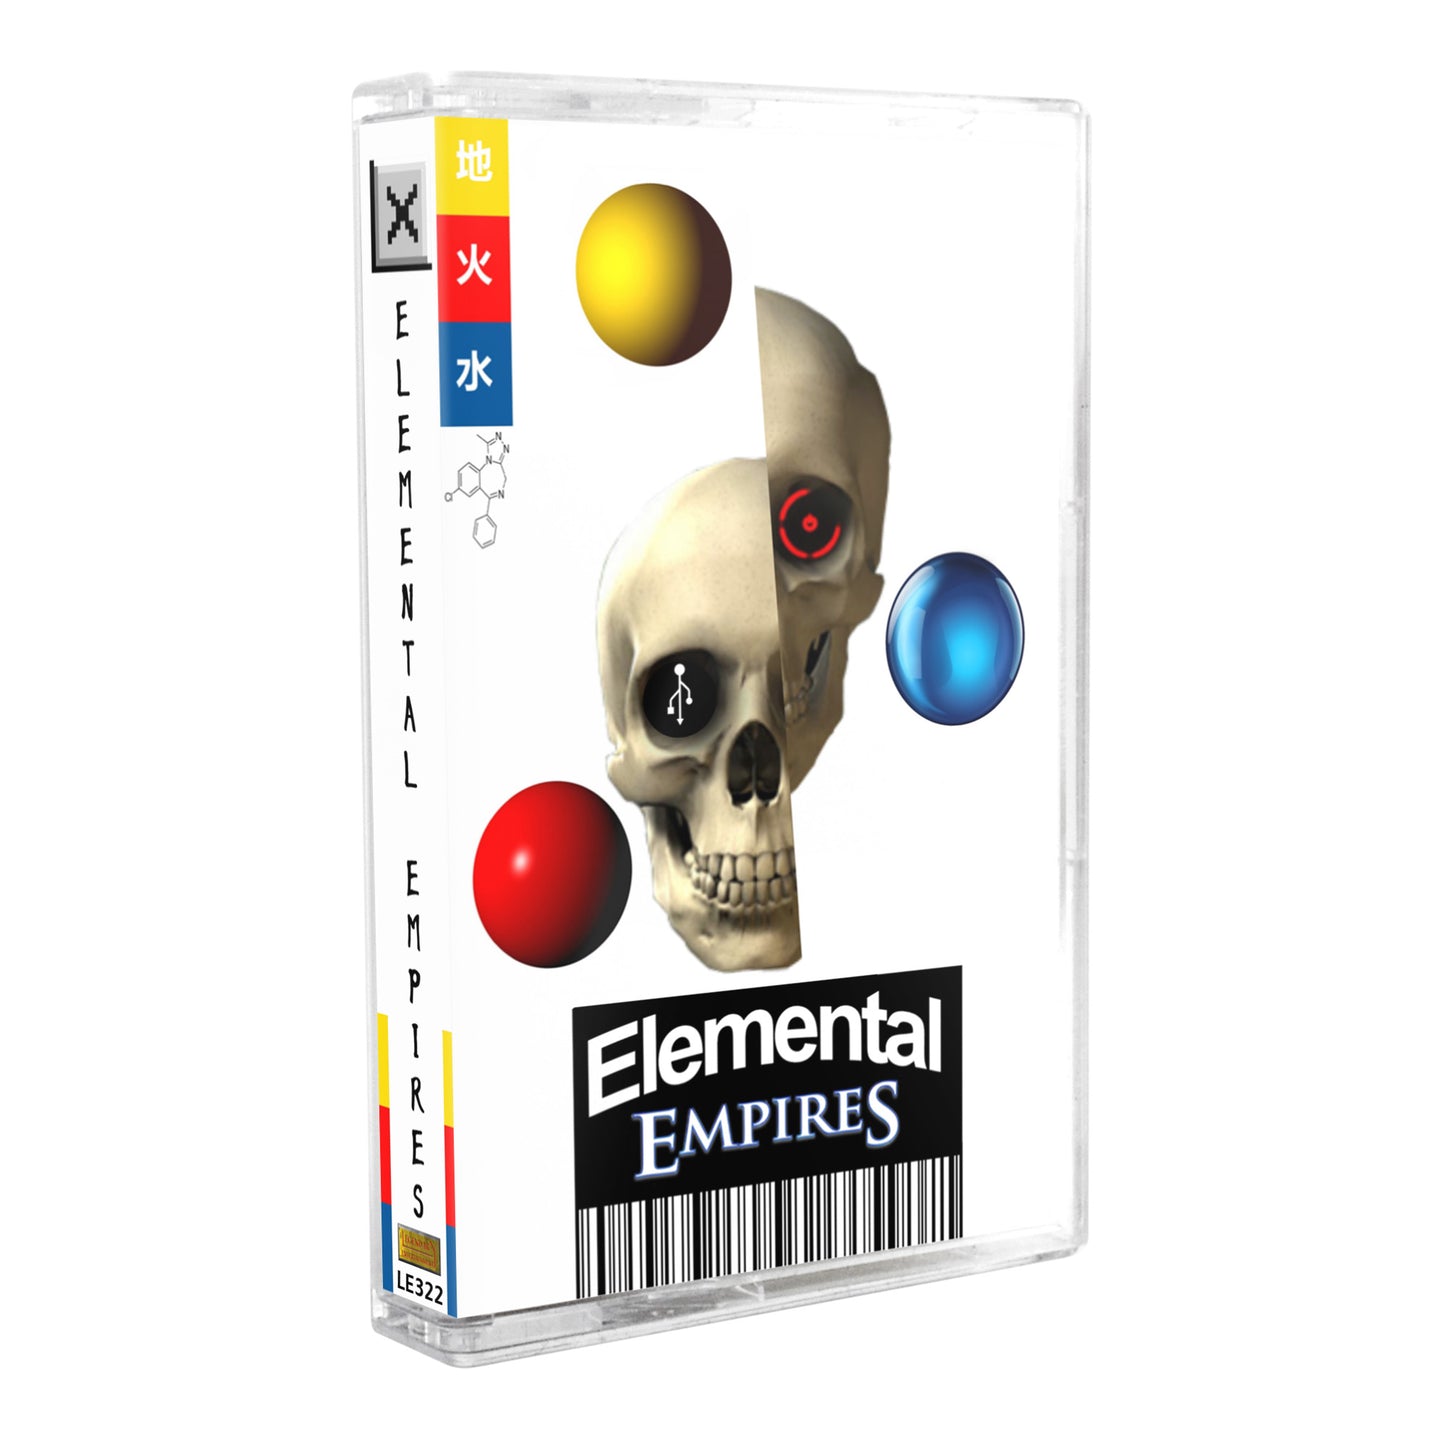 QuadratoX - "Elemental Empires" Limited Edition Cassette Tape